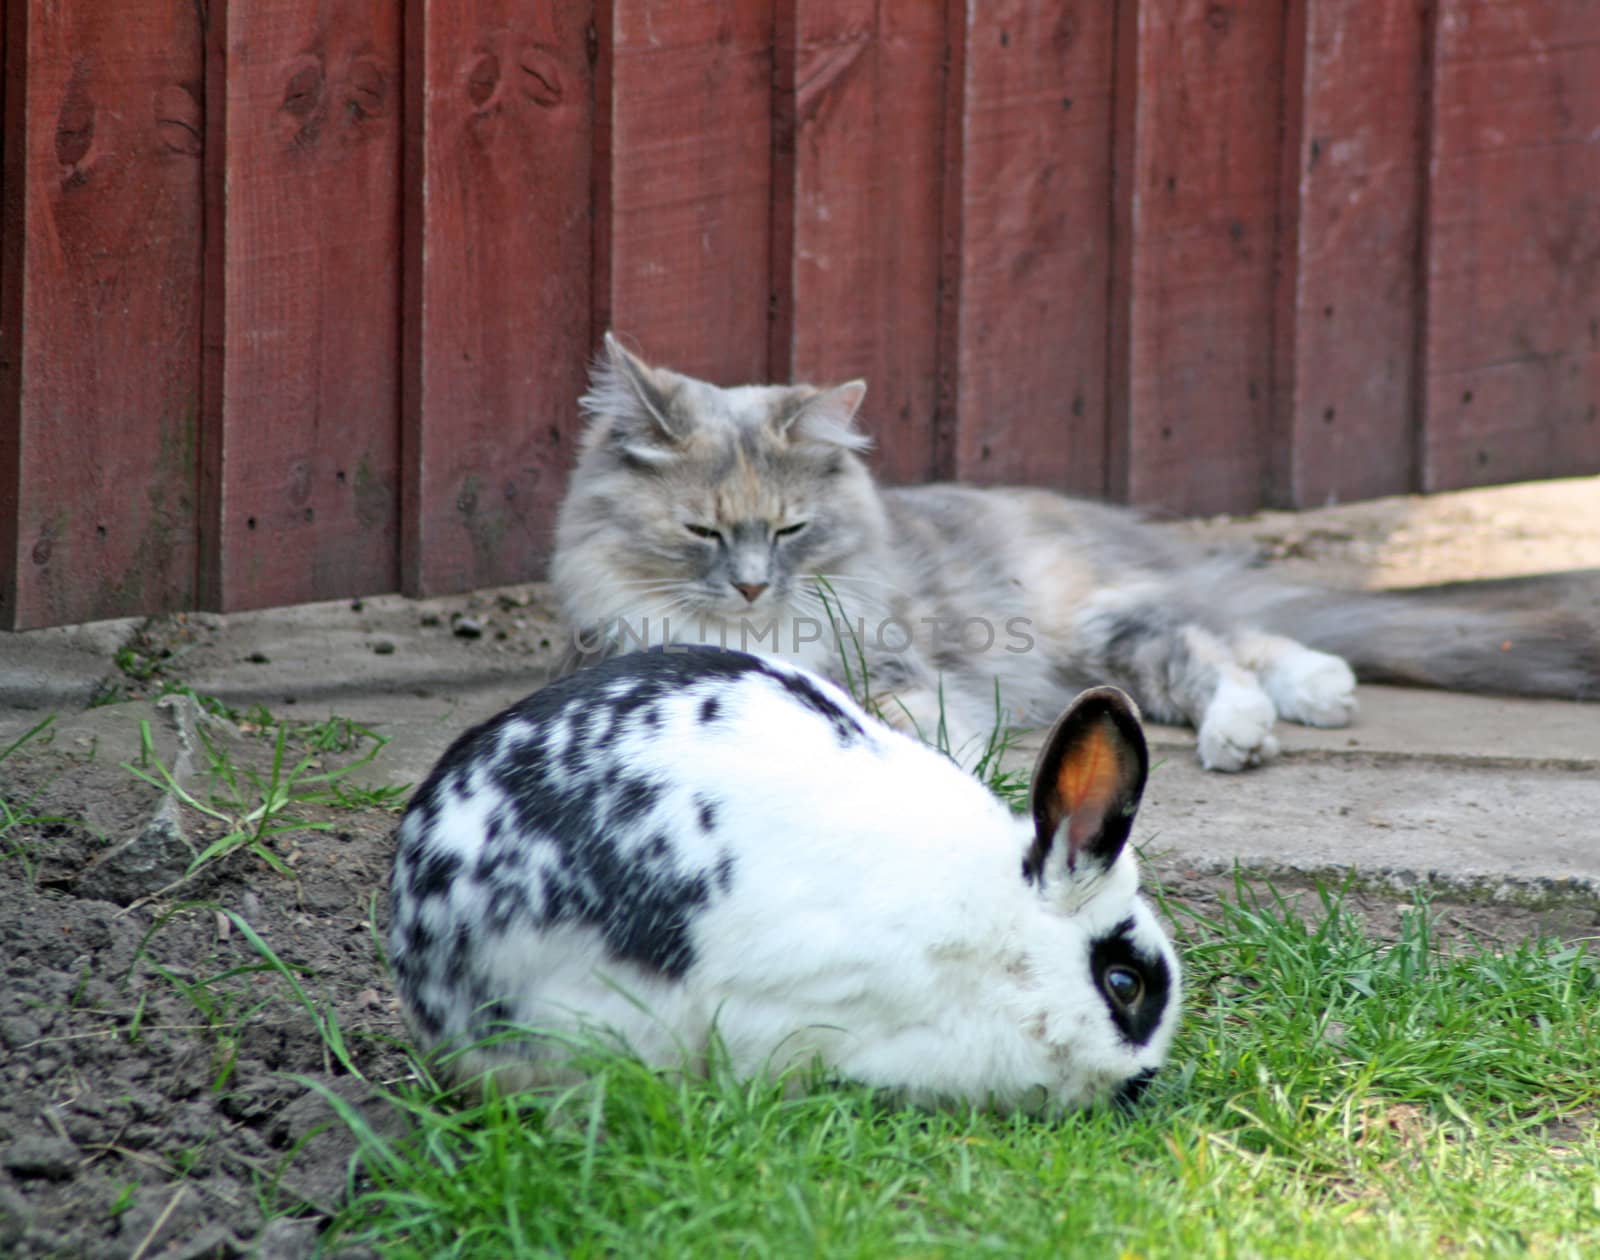 rabbit and cat by lizapixels